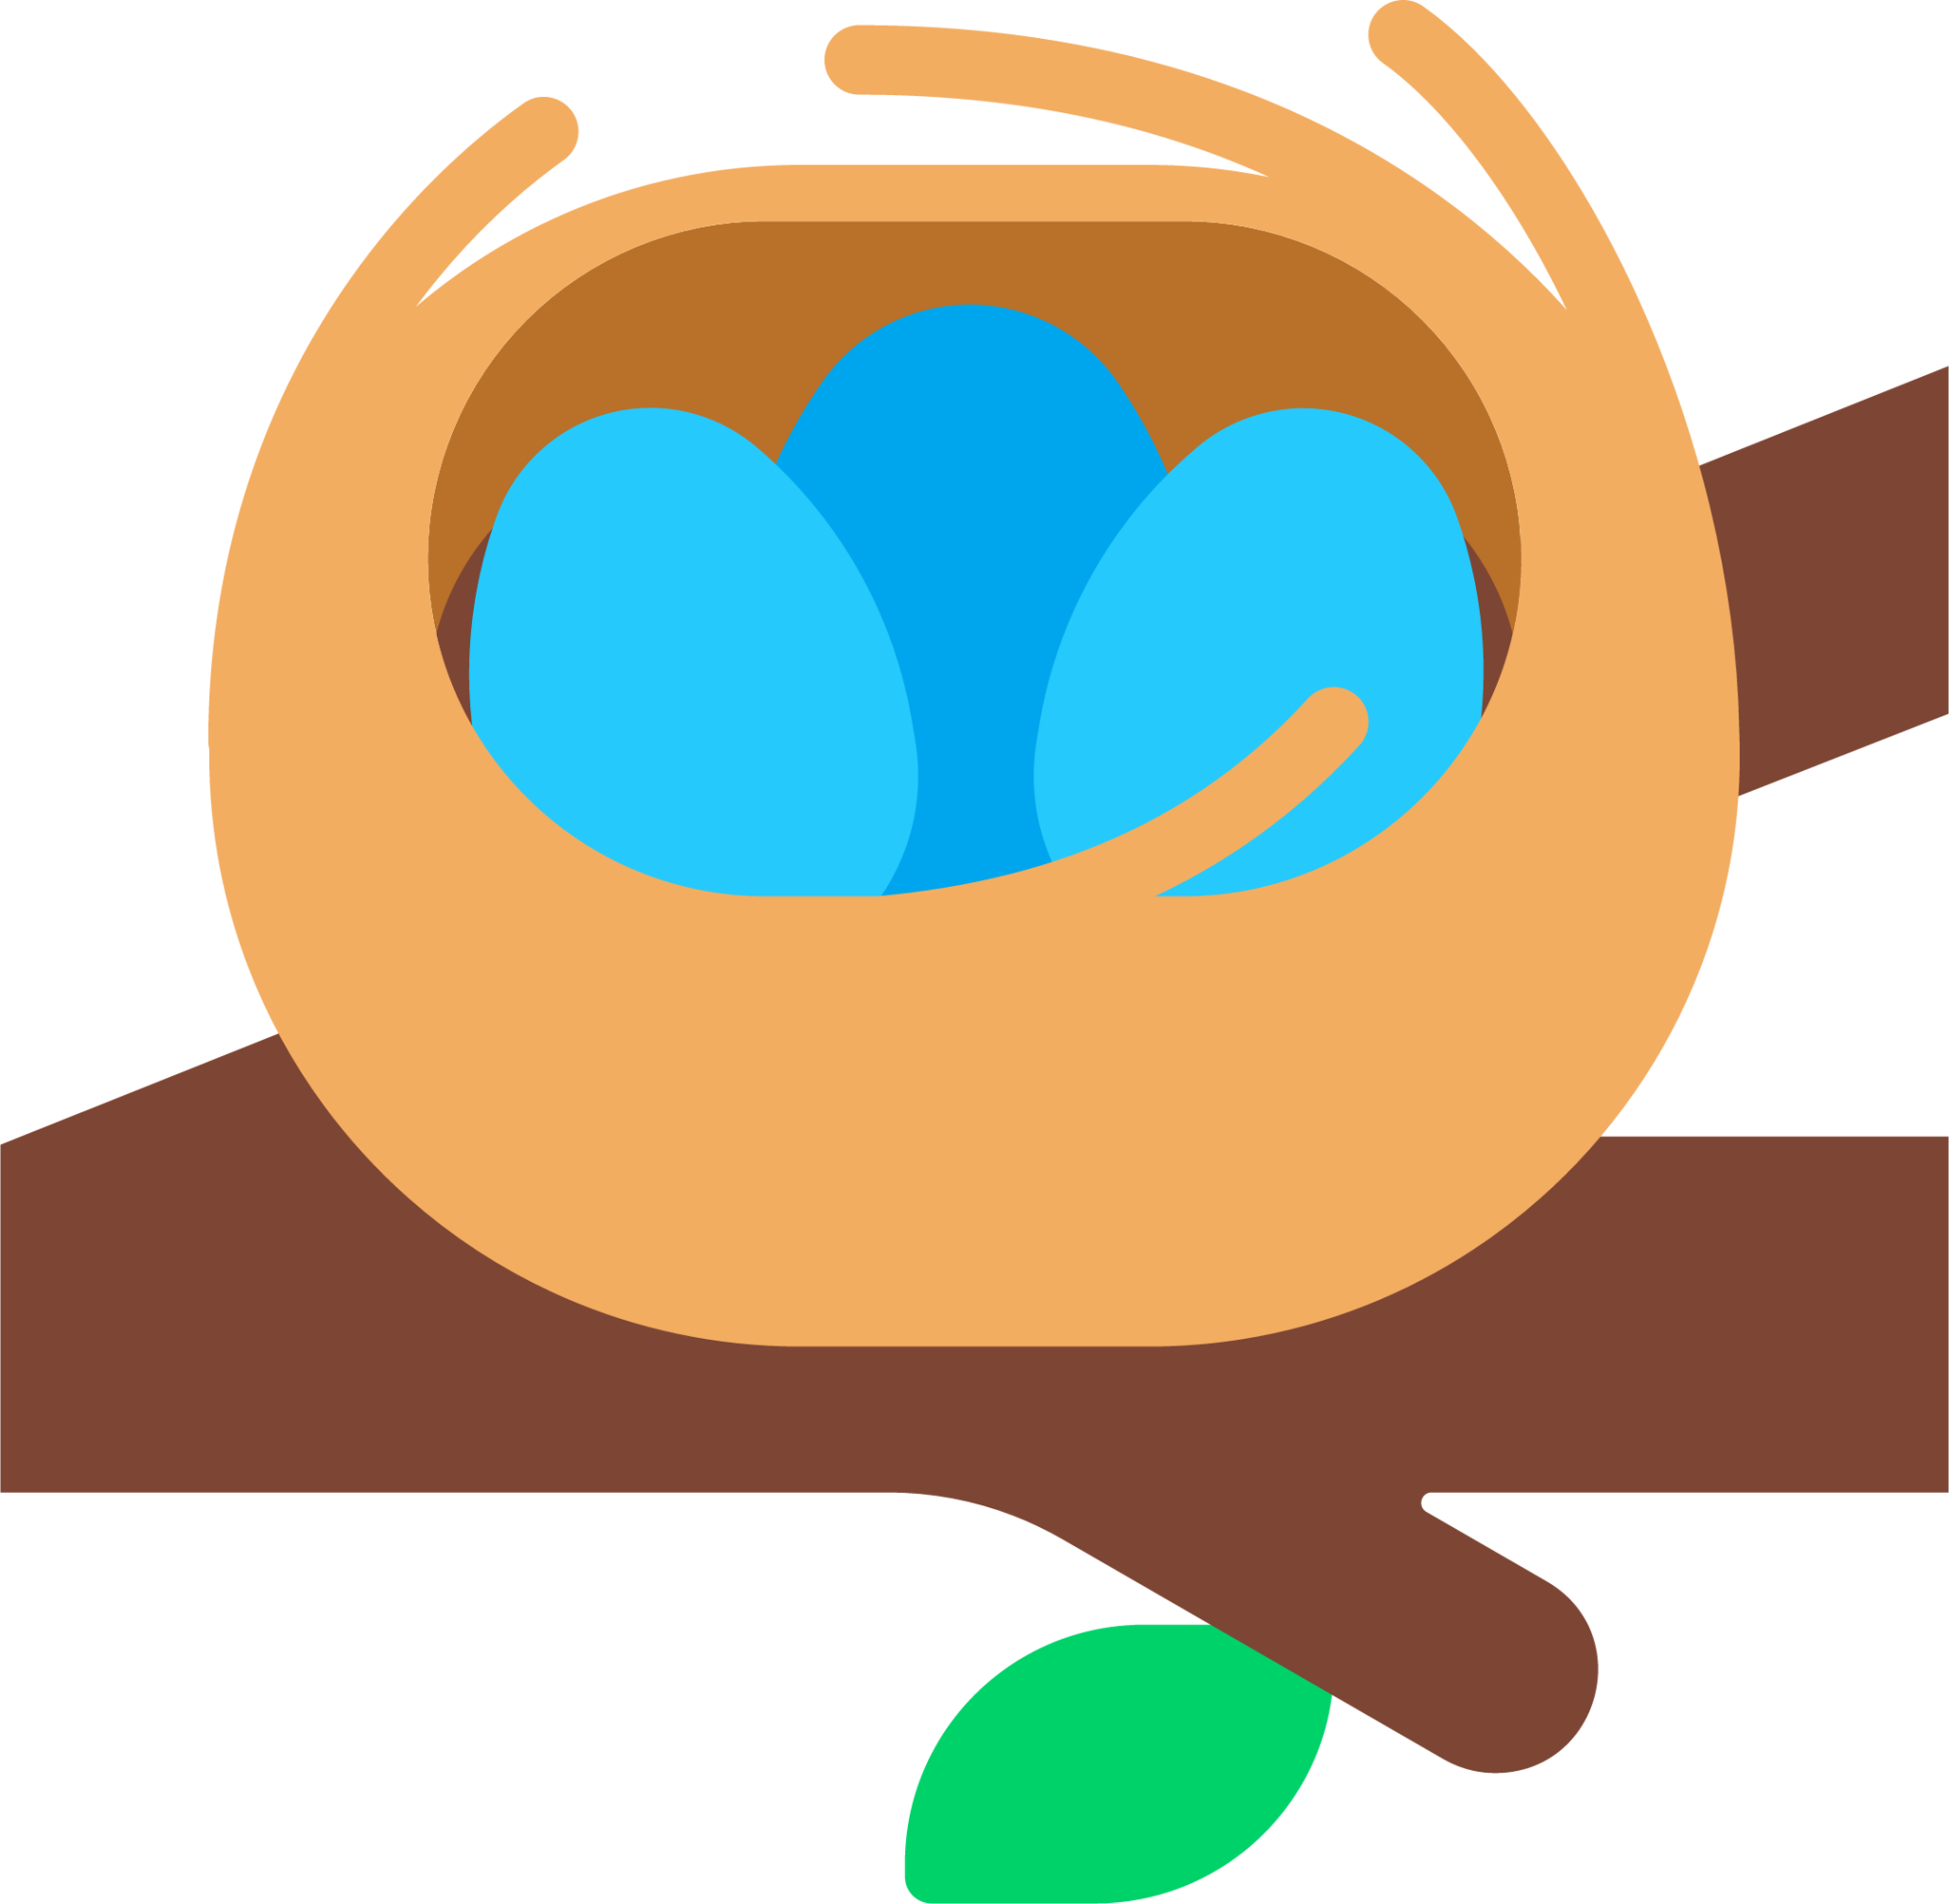 nest with eggs emoji